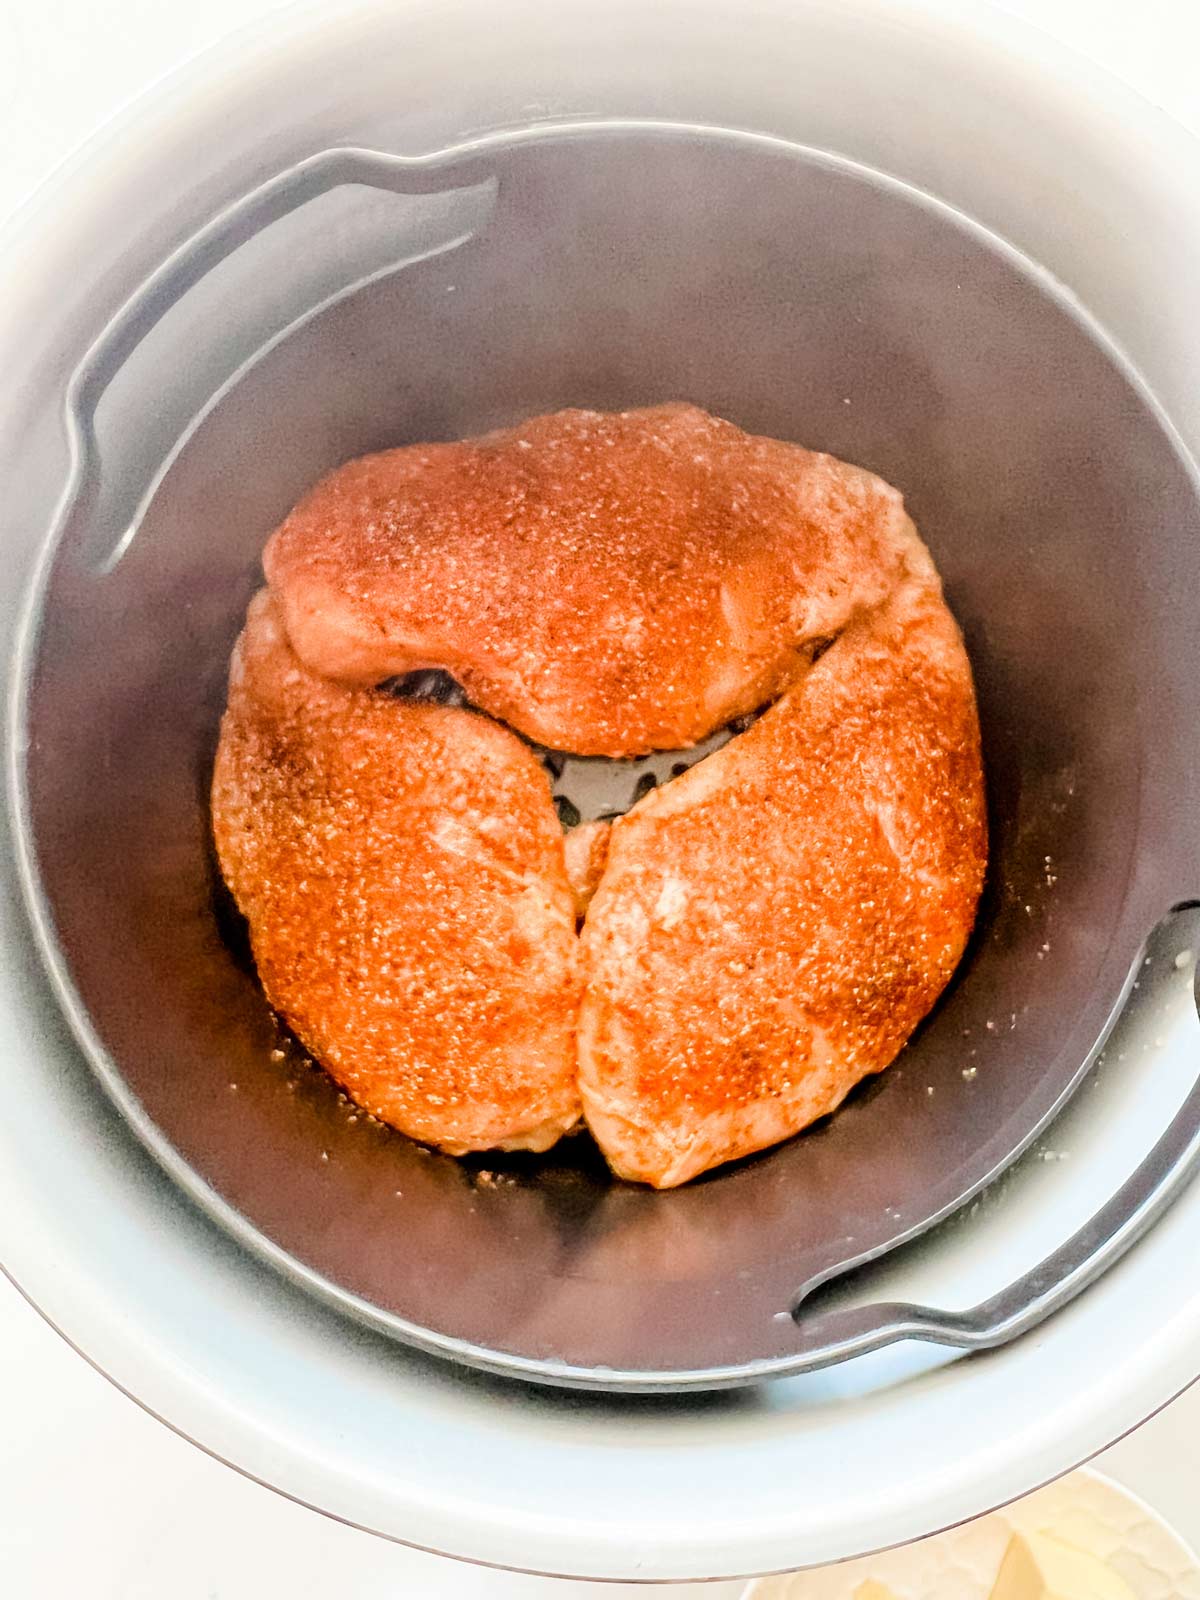 Chicken breast in the steam crisp basket of a Ninja Foodi.